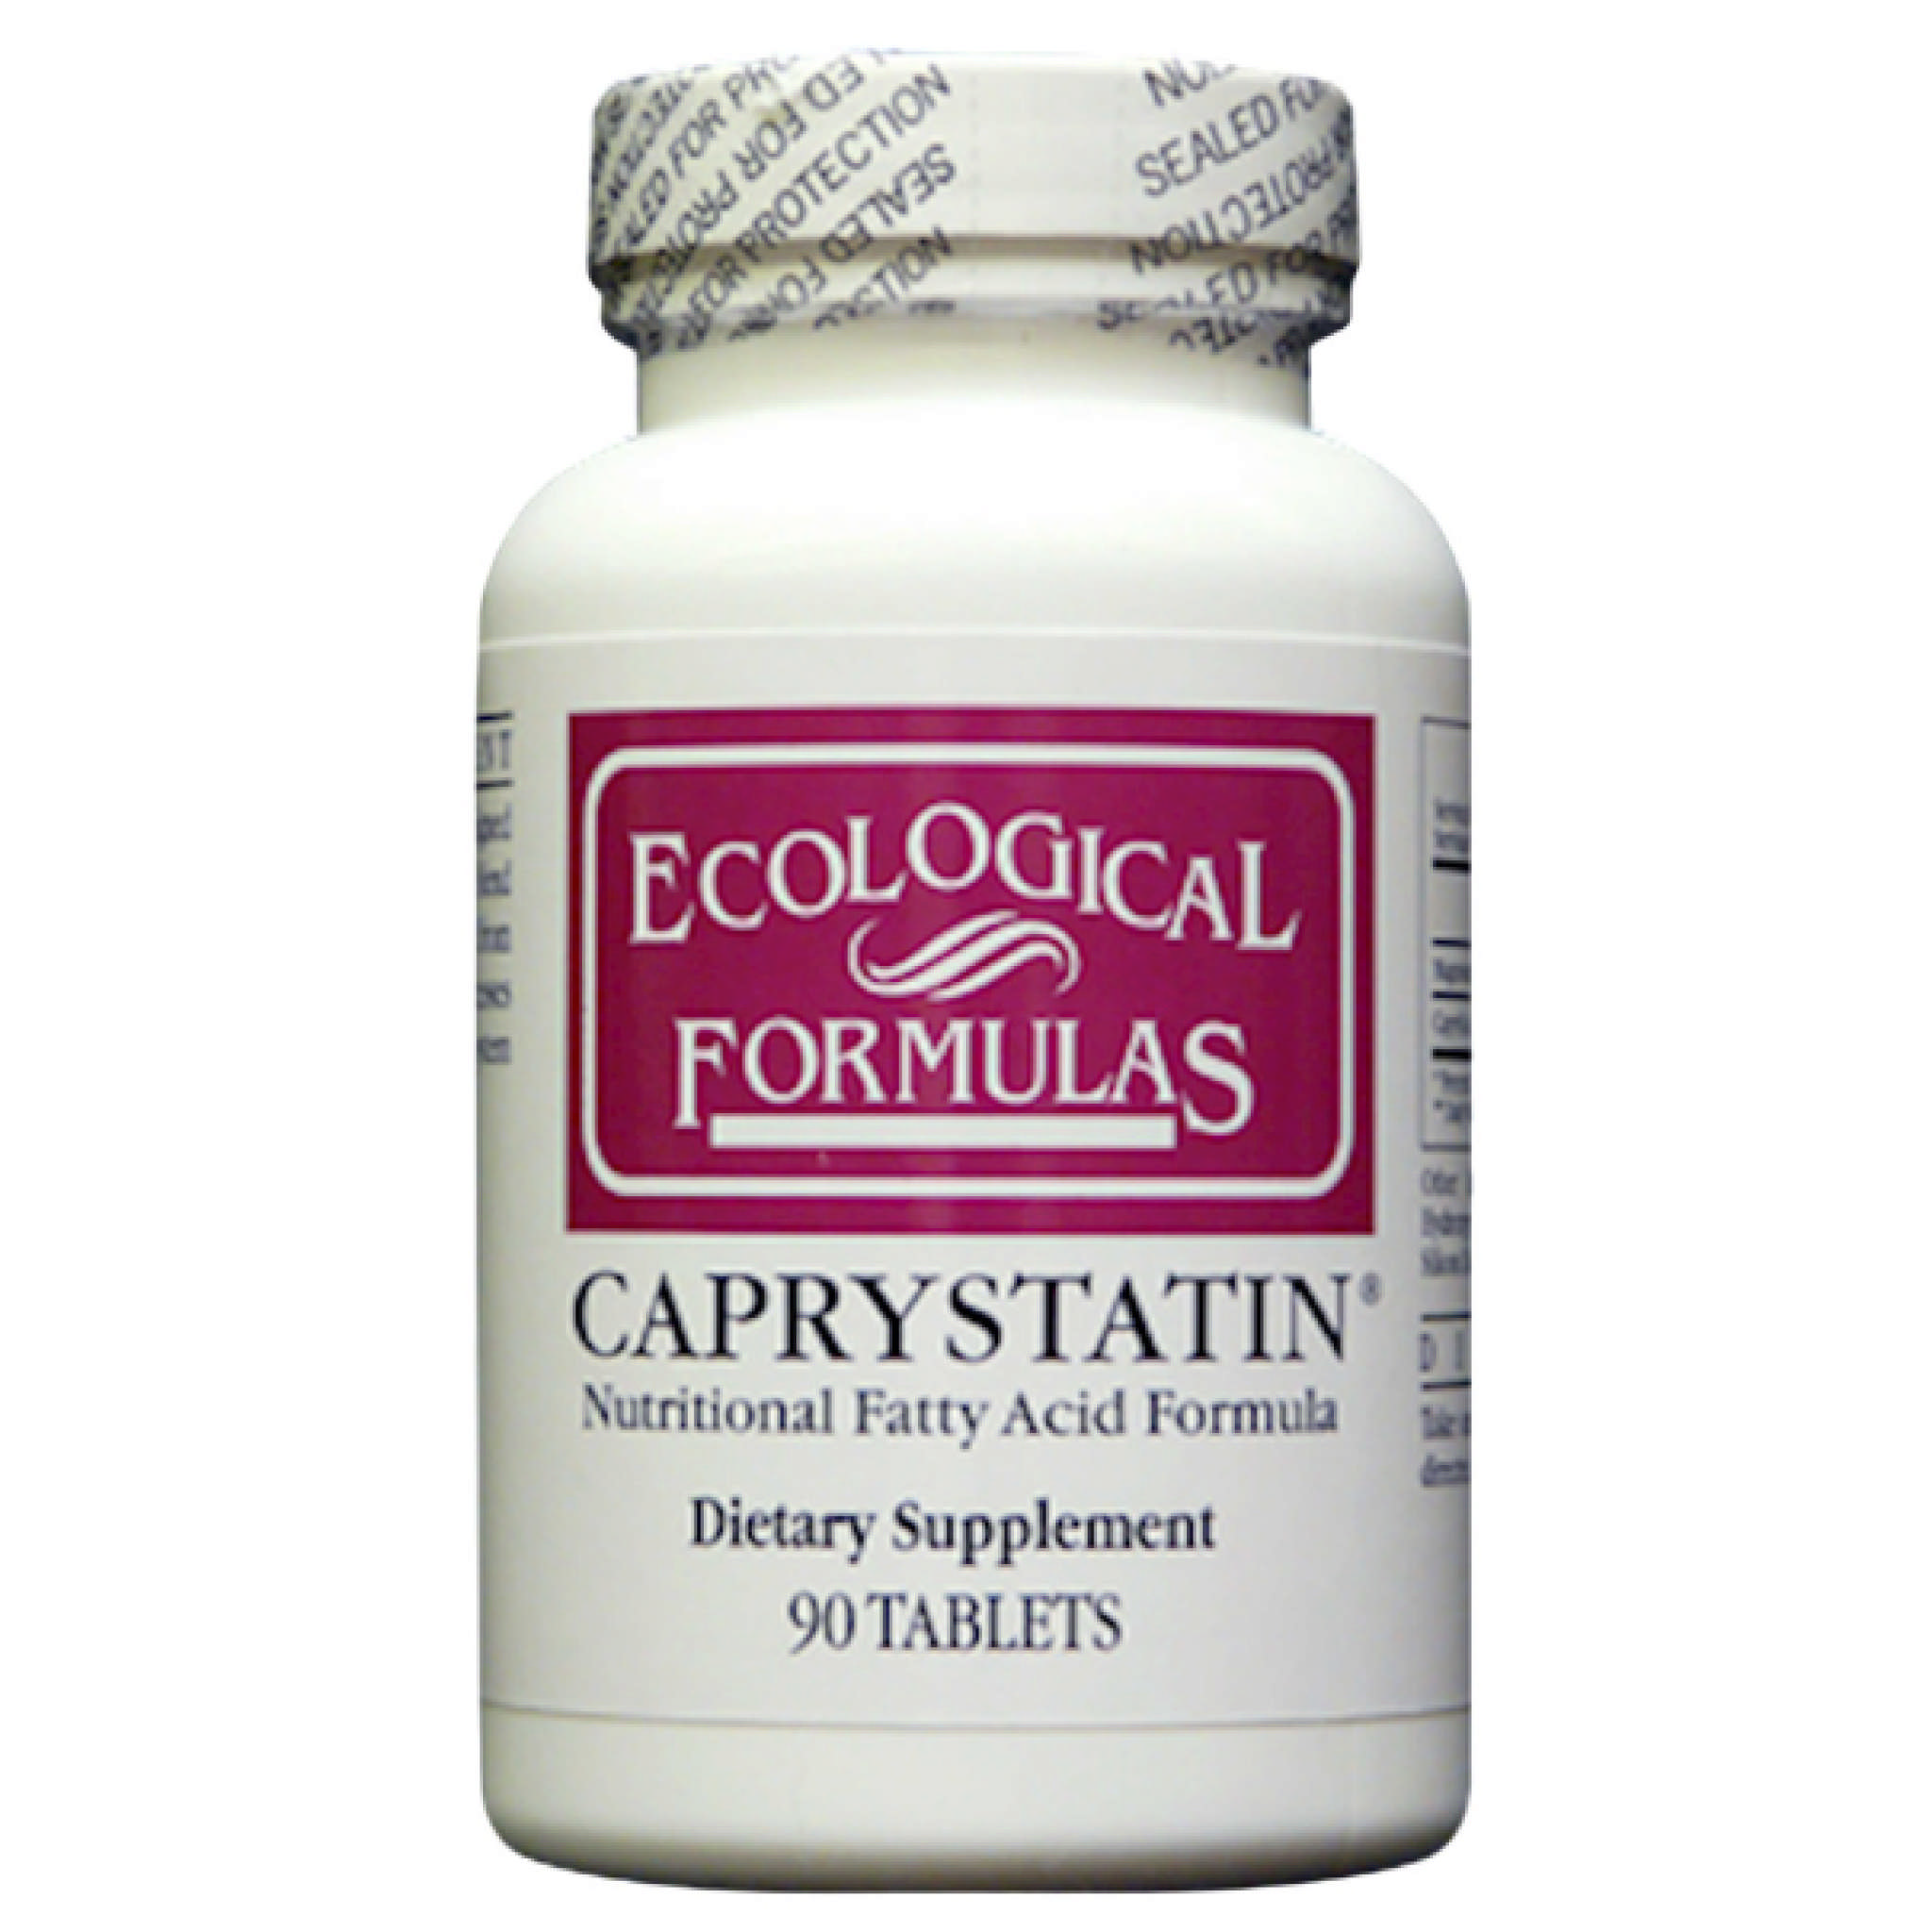 Ecological Formulas - Caprystatin